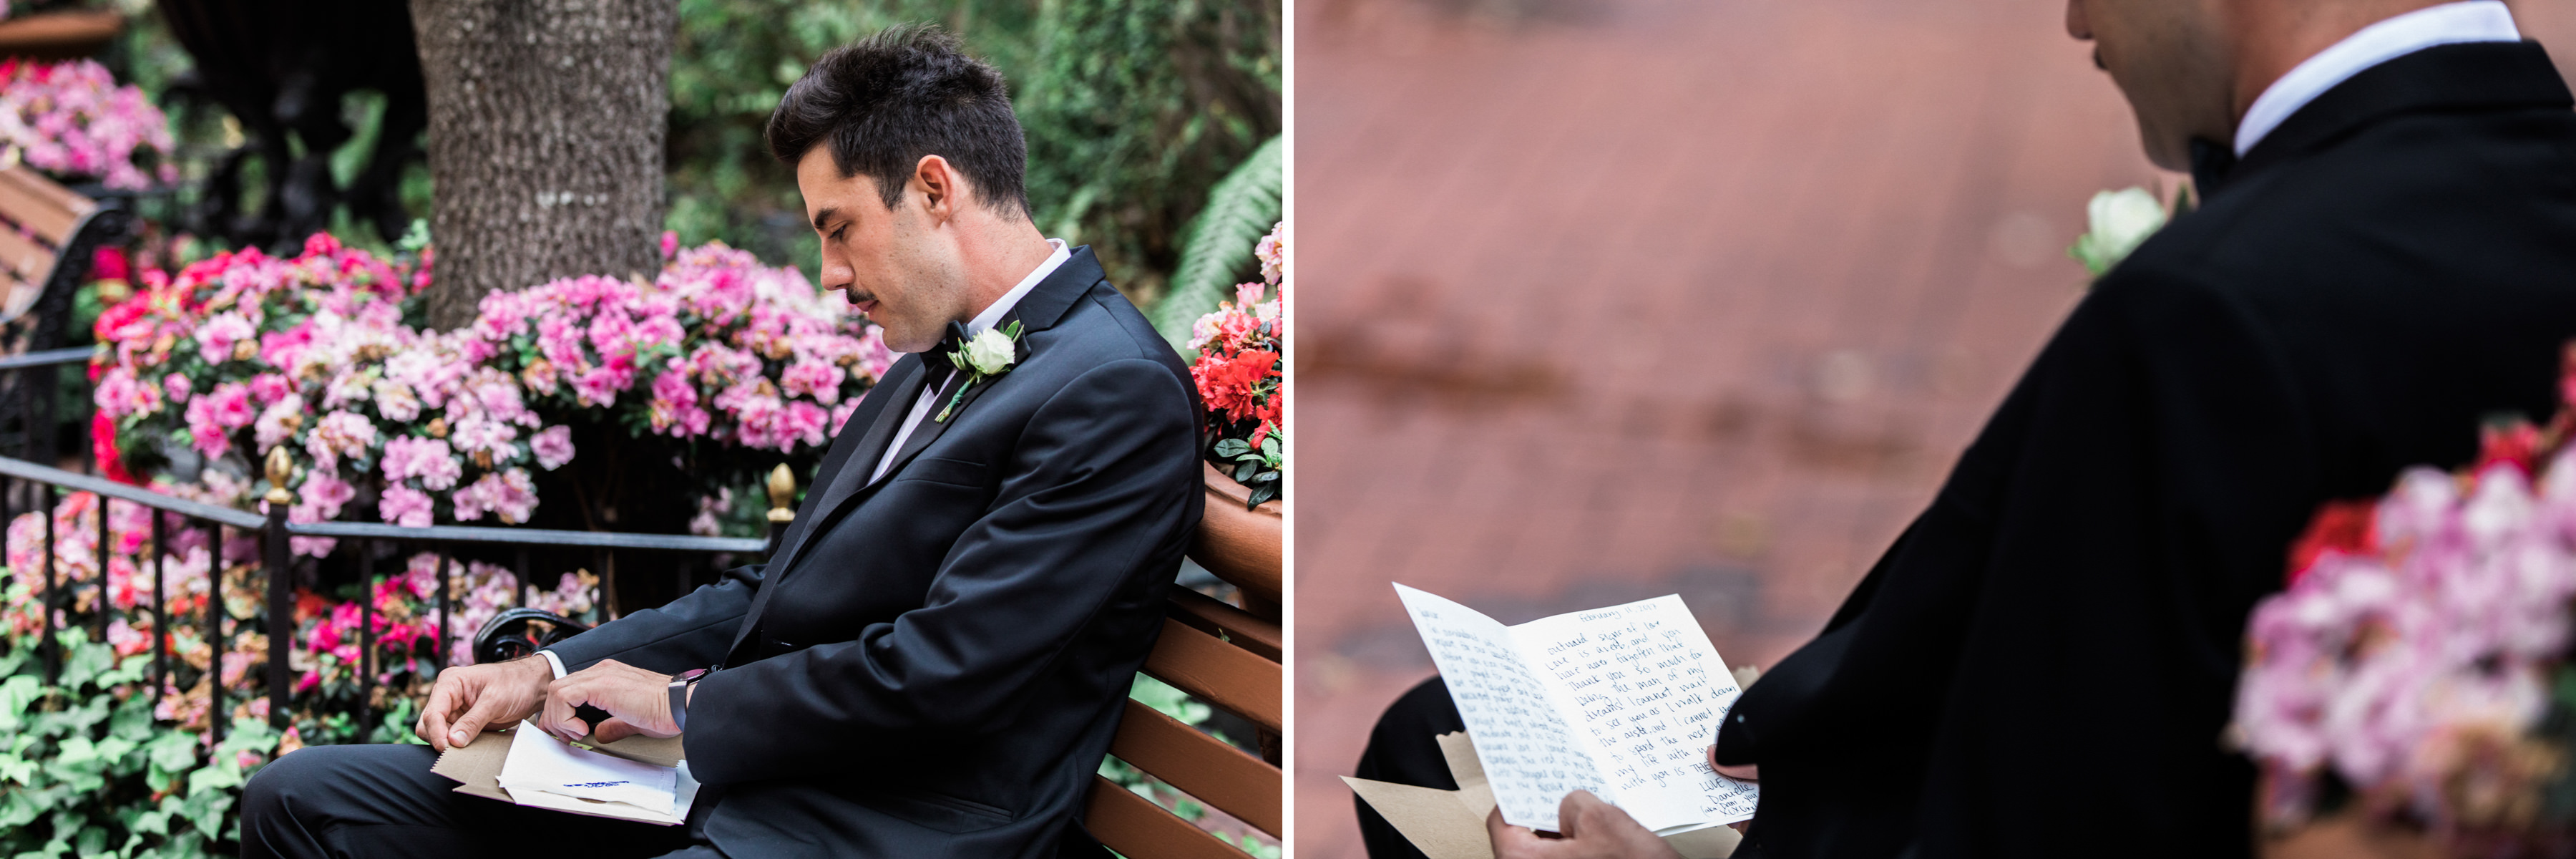 MULLET_WEDDING_NEW_ORLEANS_LOUISIANA_WEDDING_PHOTOGRAPHY_78